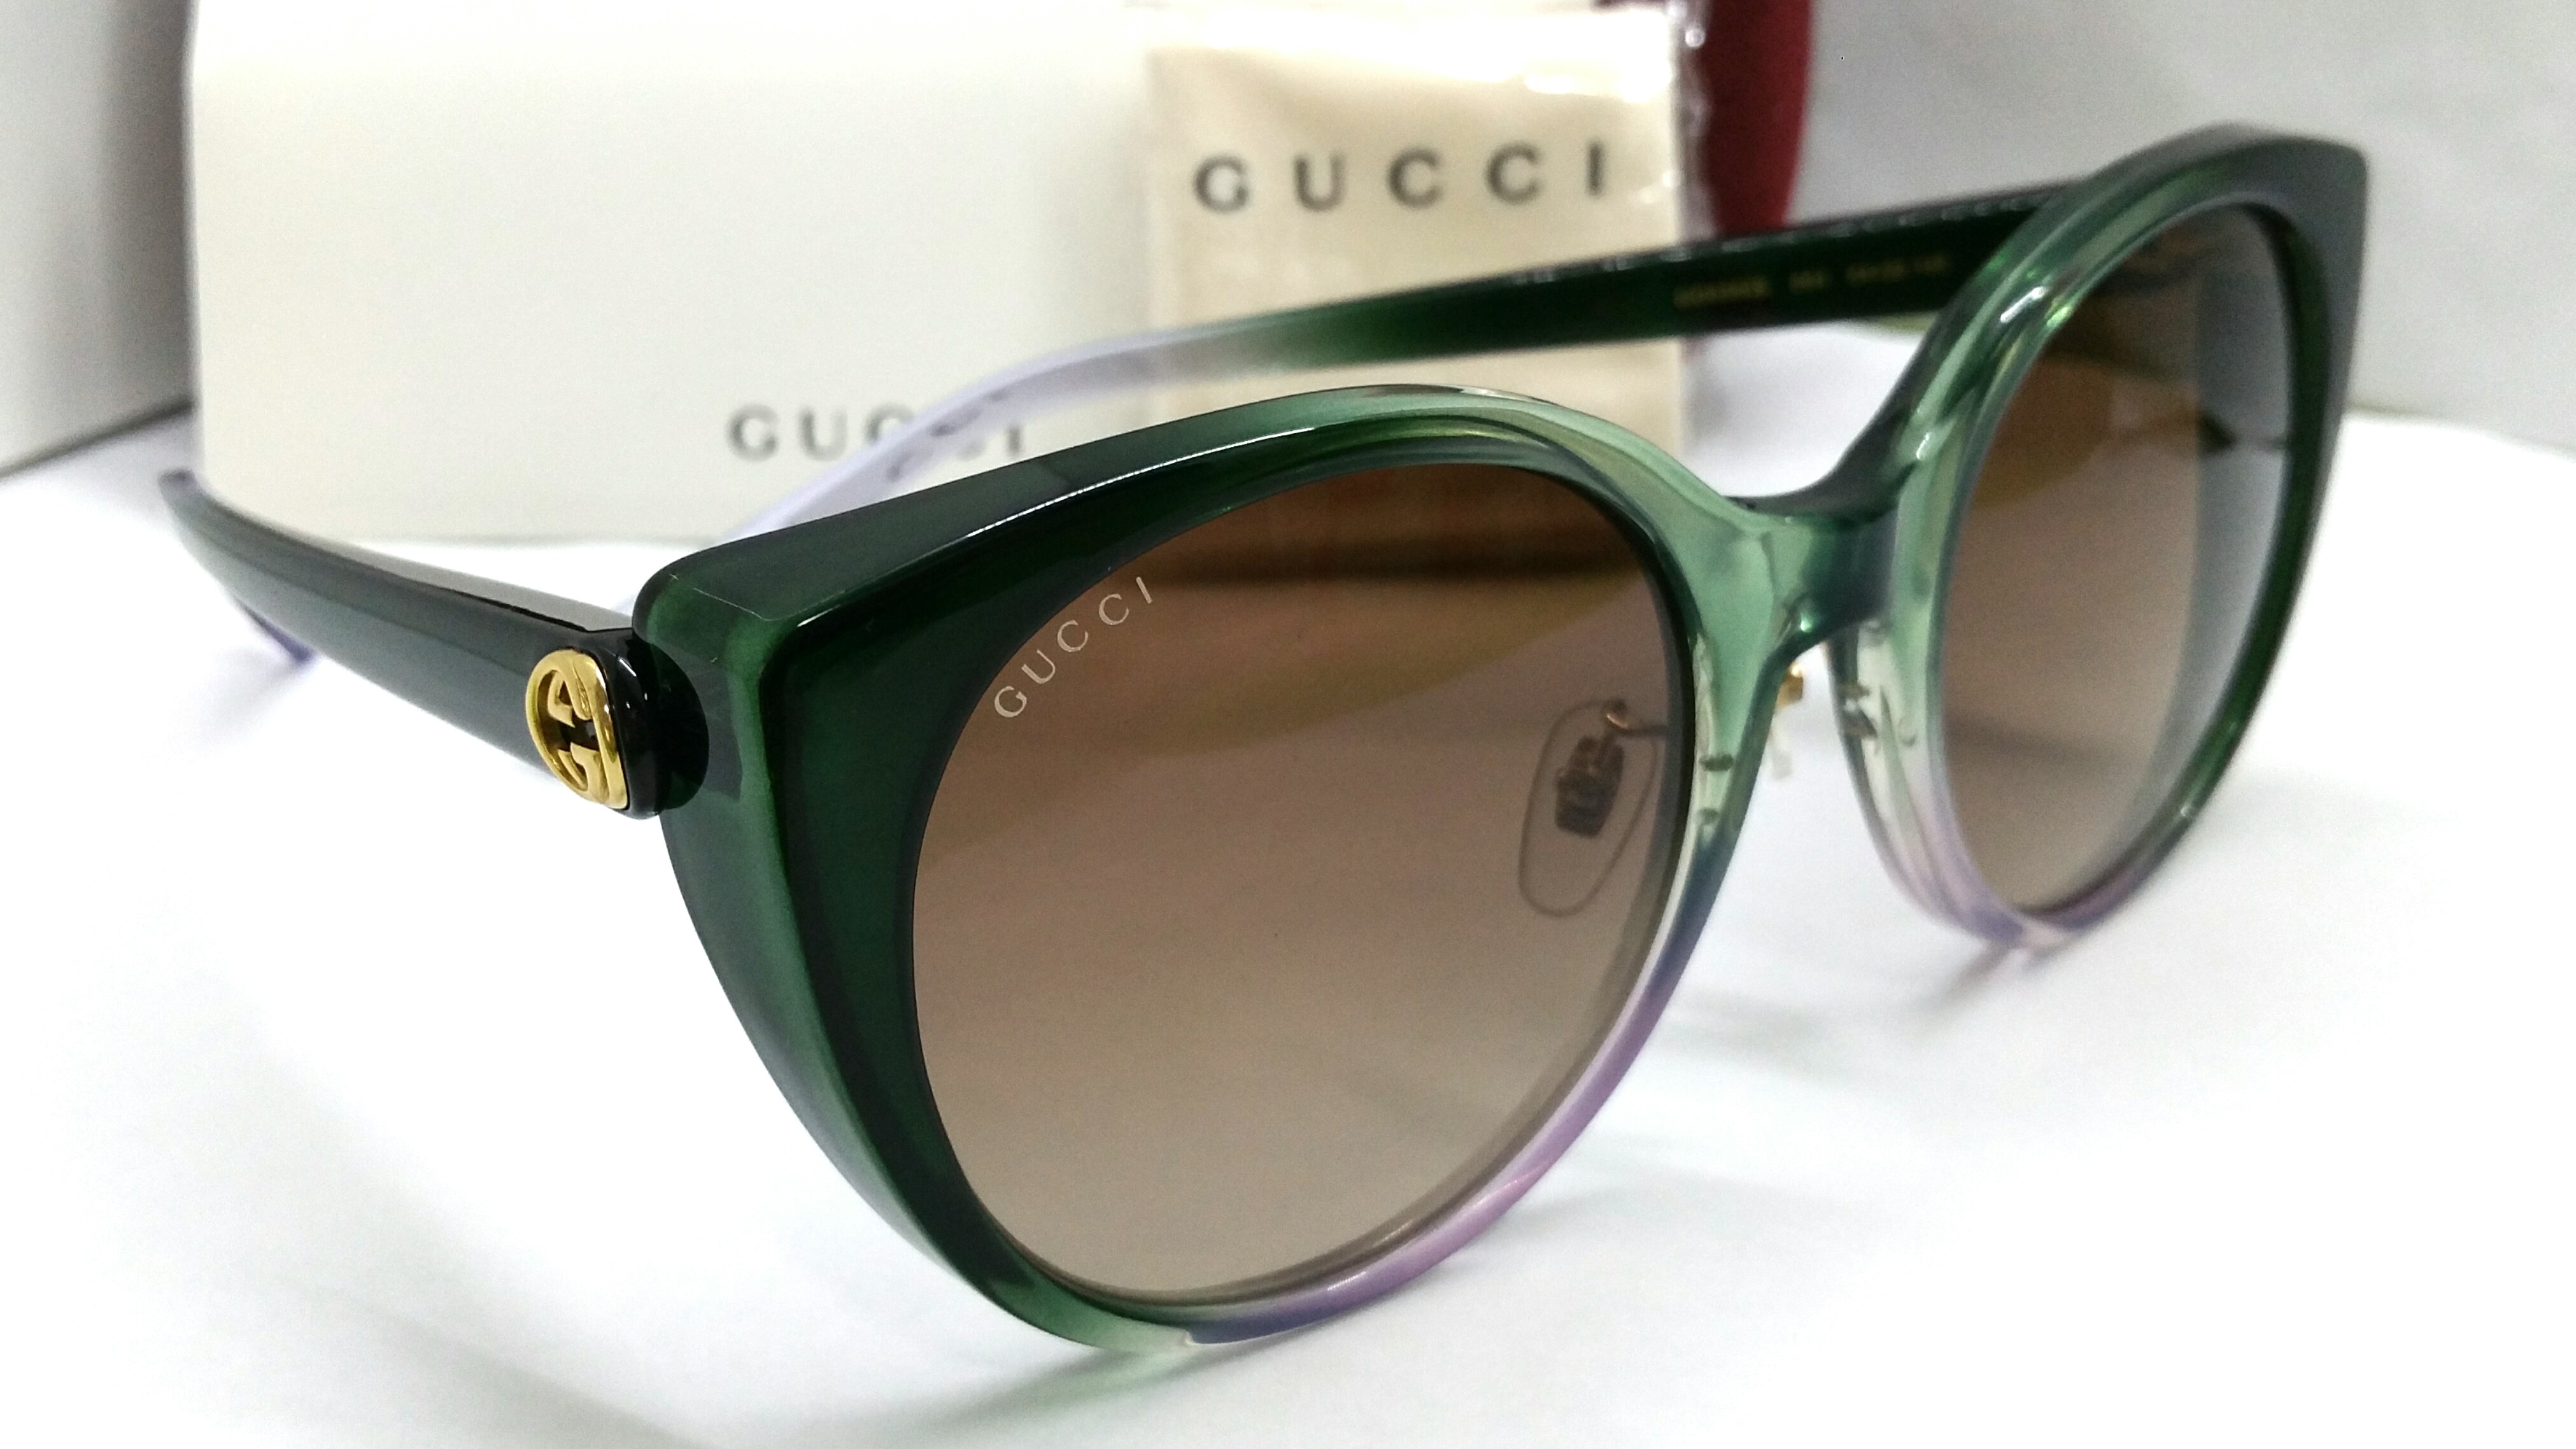 gucci glasses serial number